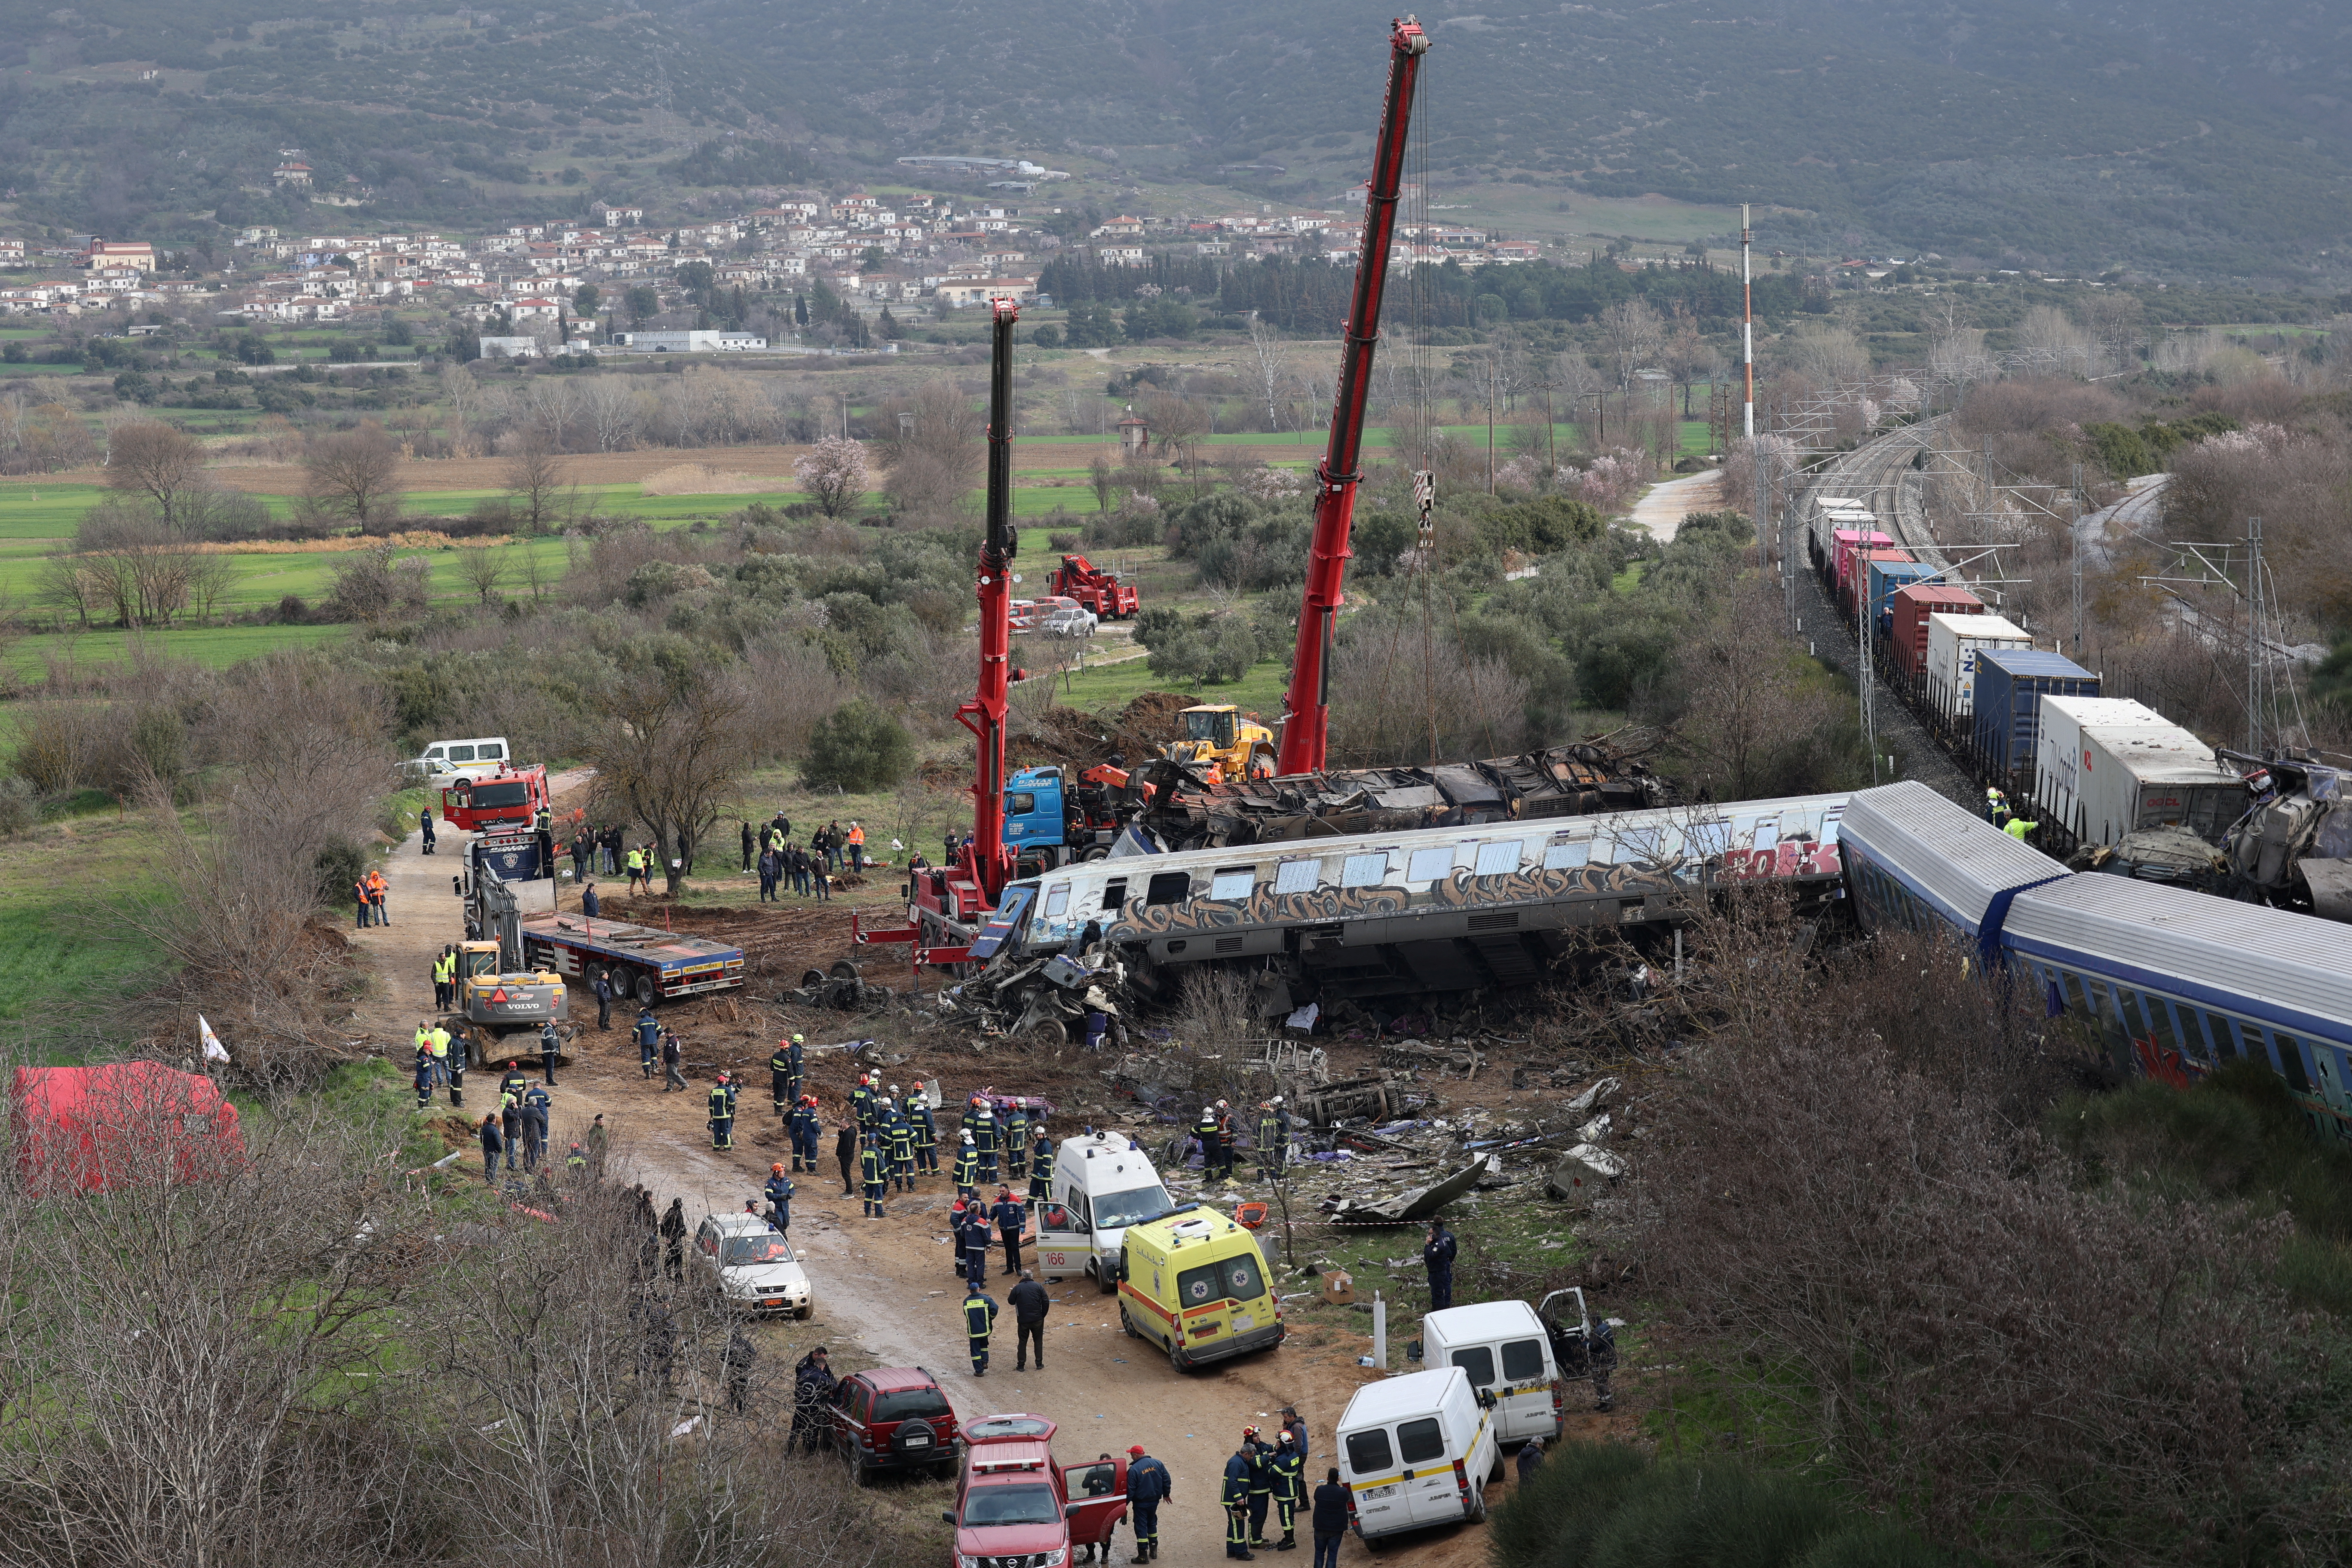 Trains collide near Larissa